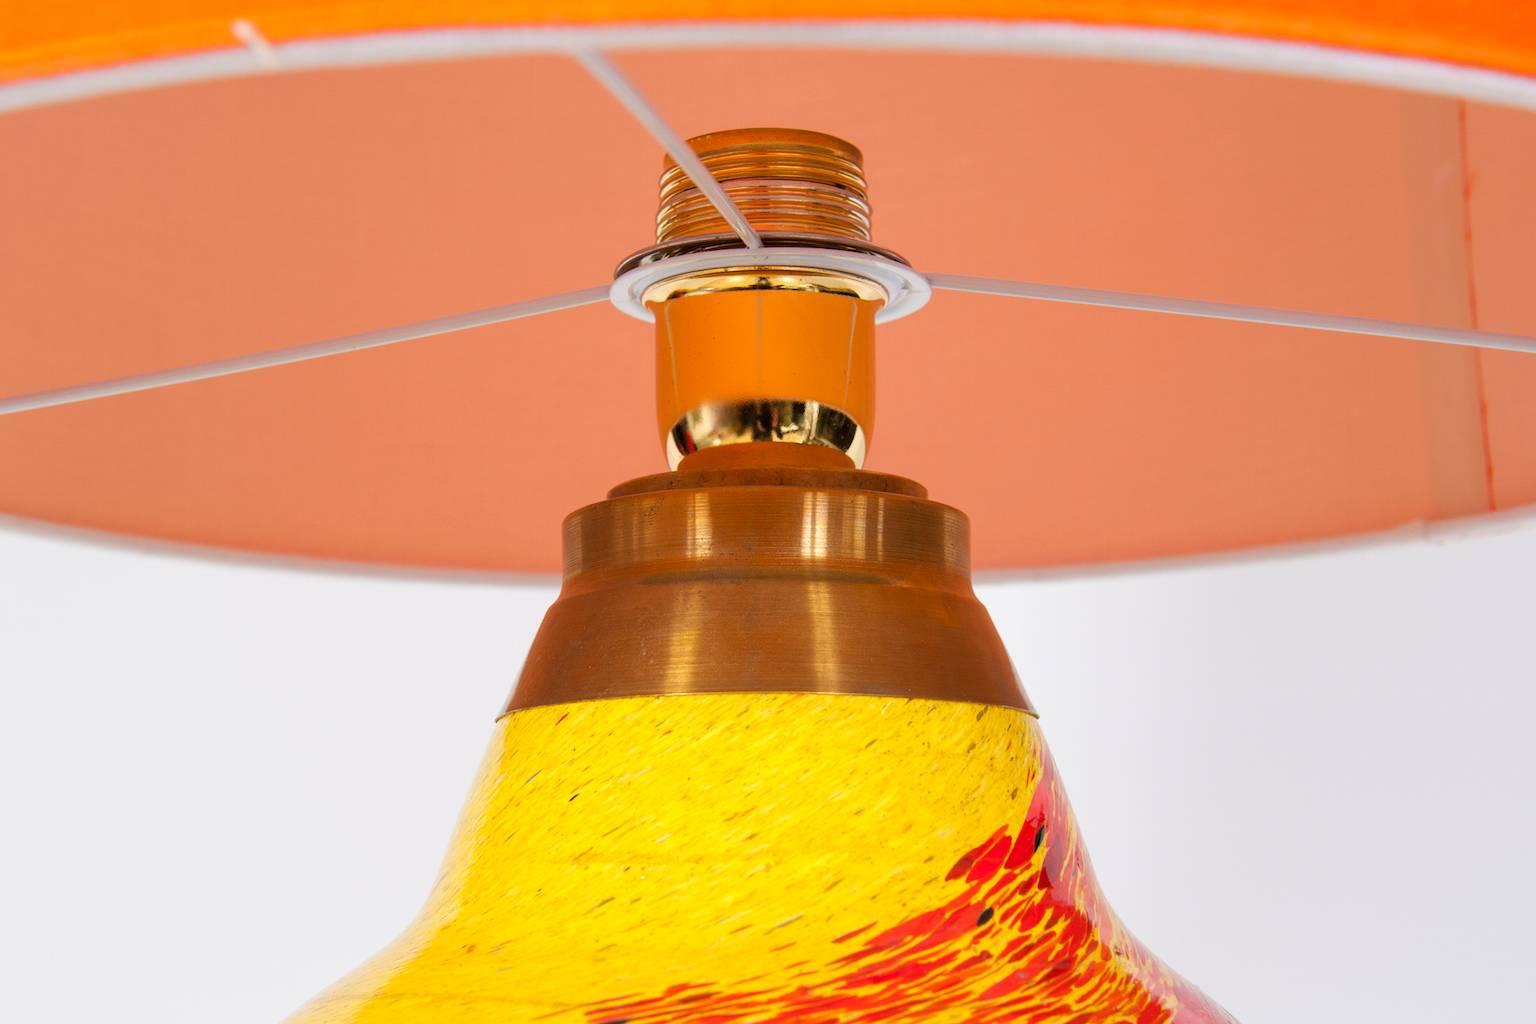 Italian Venetian Murano Glass Table Lamp in Multicolor yellow orang 1970s For Sale 2